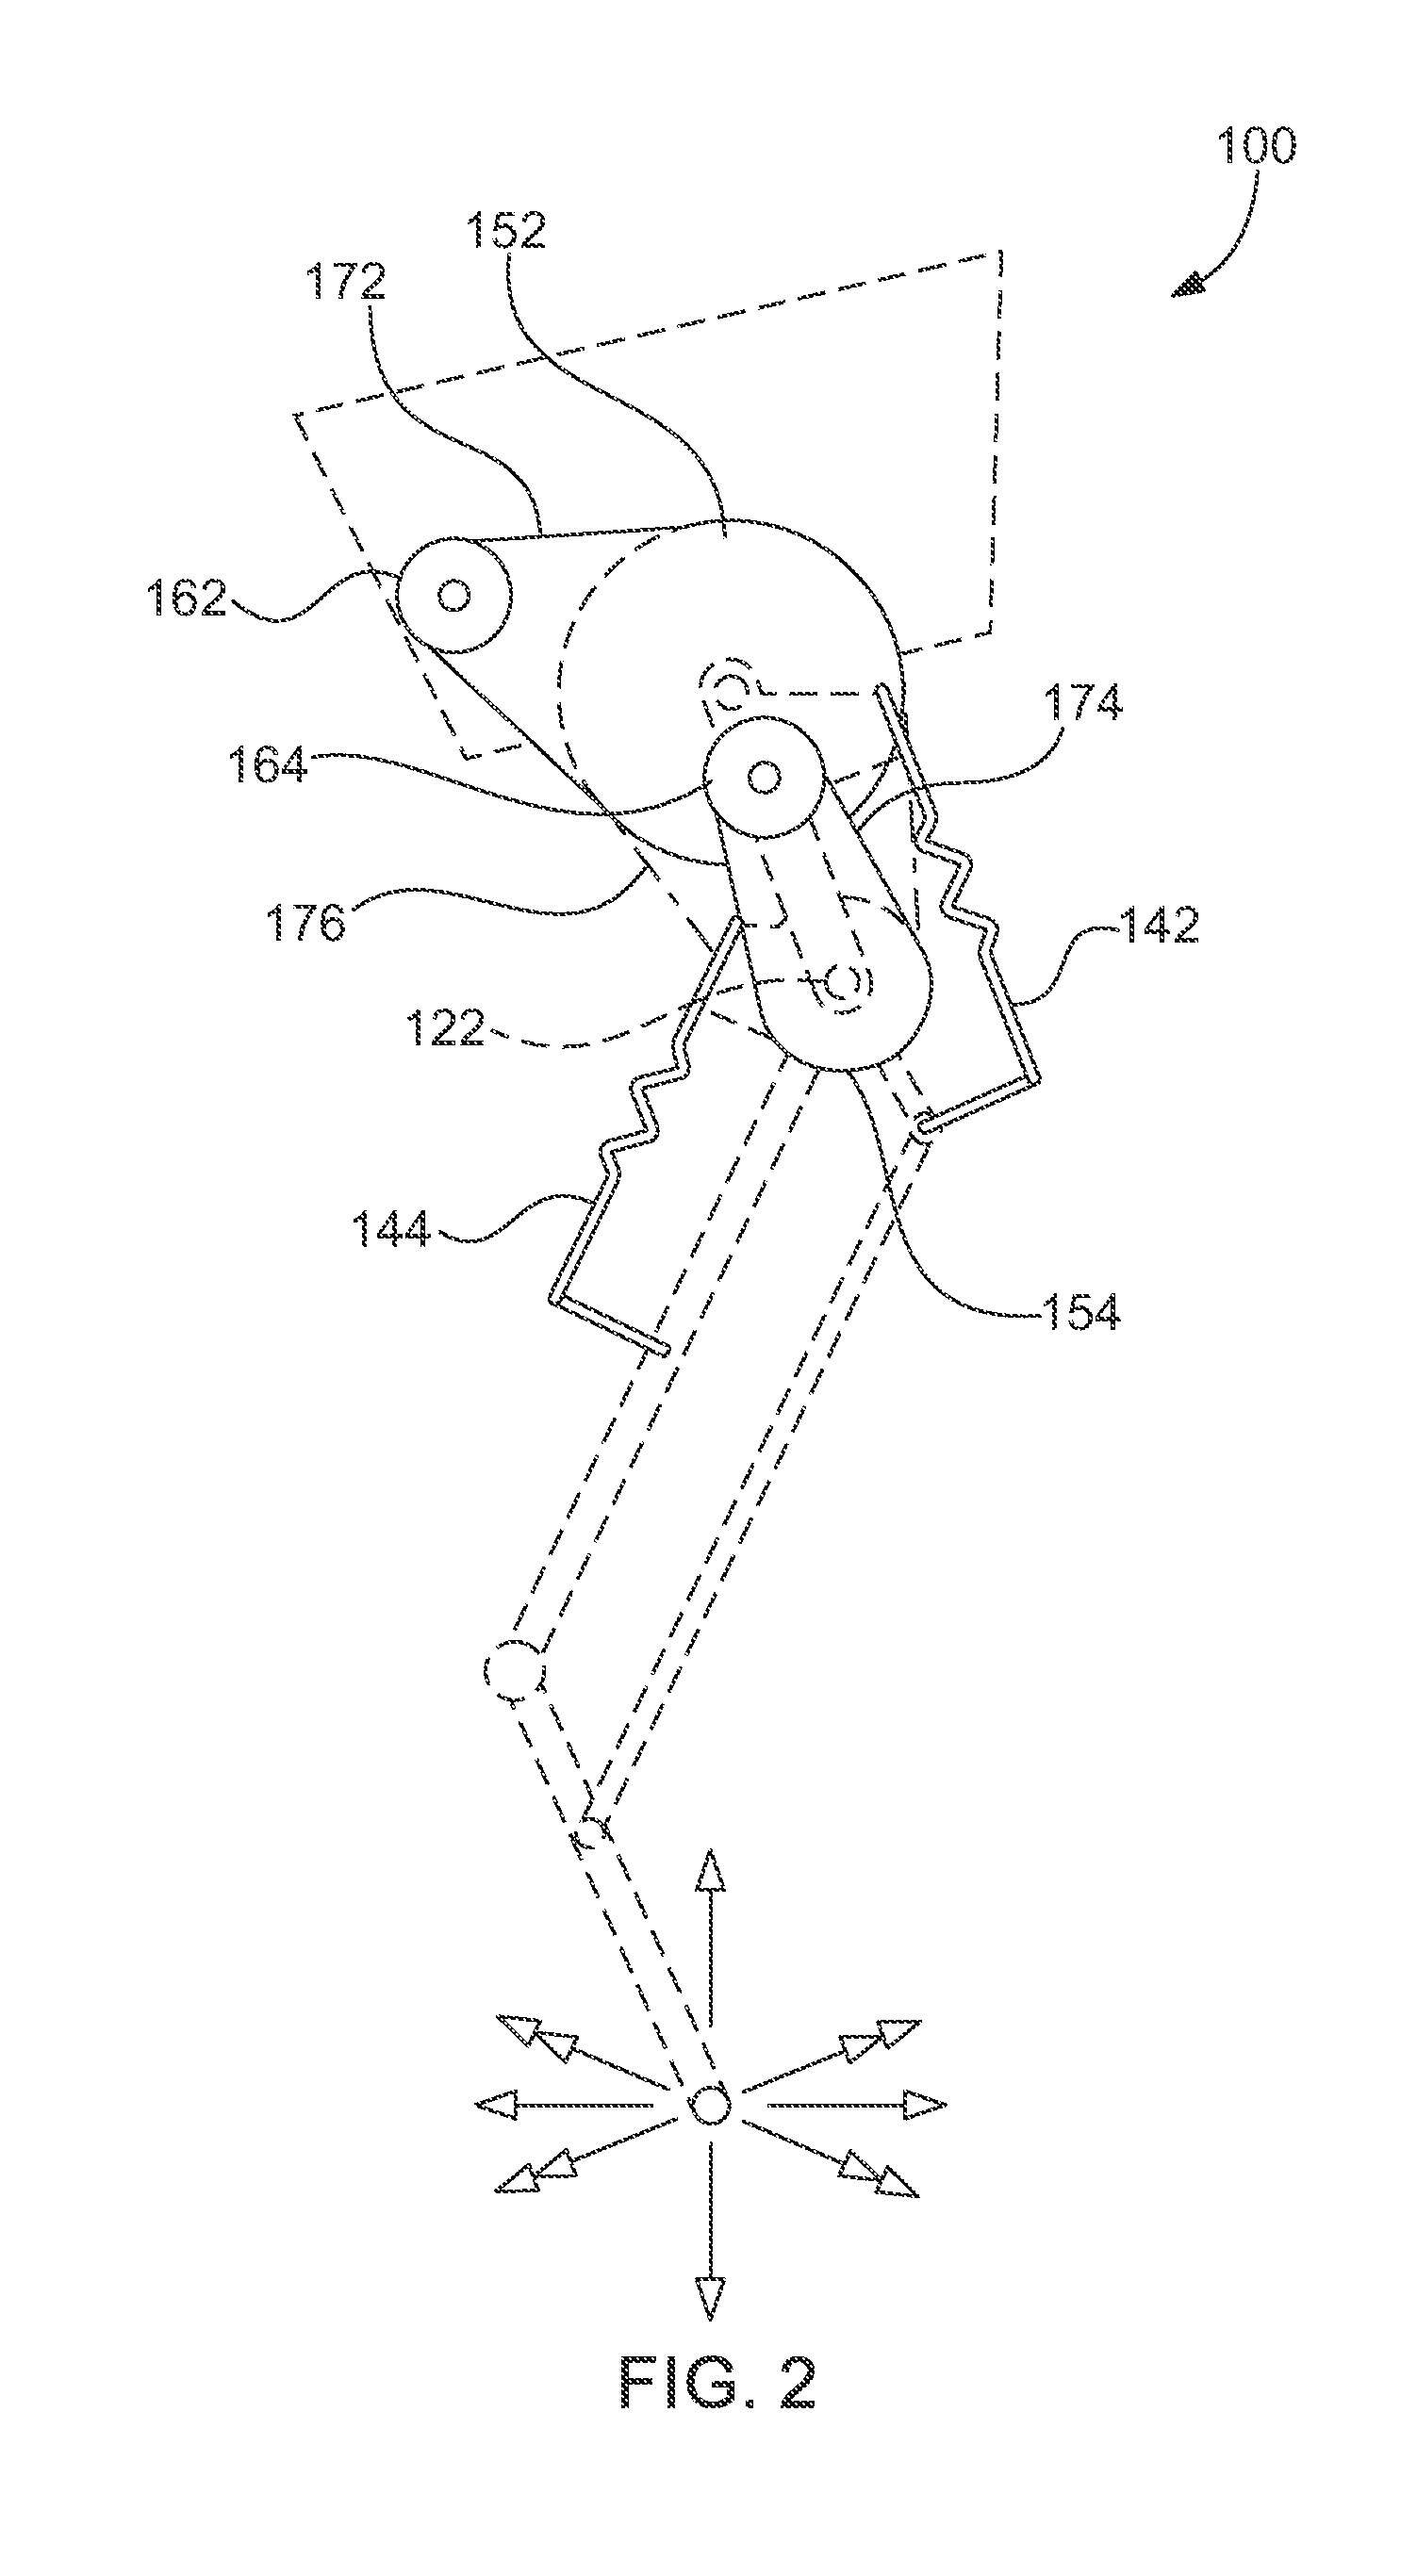 Leg configuration for spring-mass legged locomotion